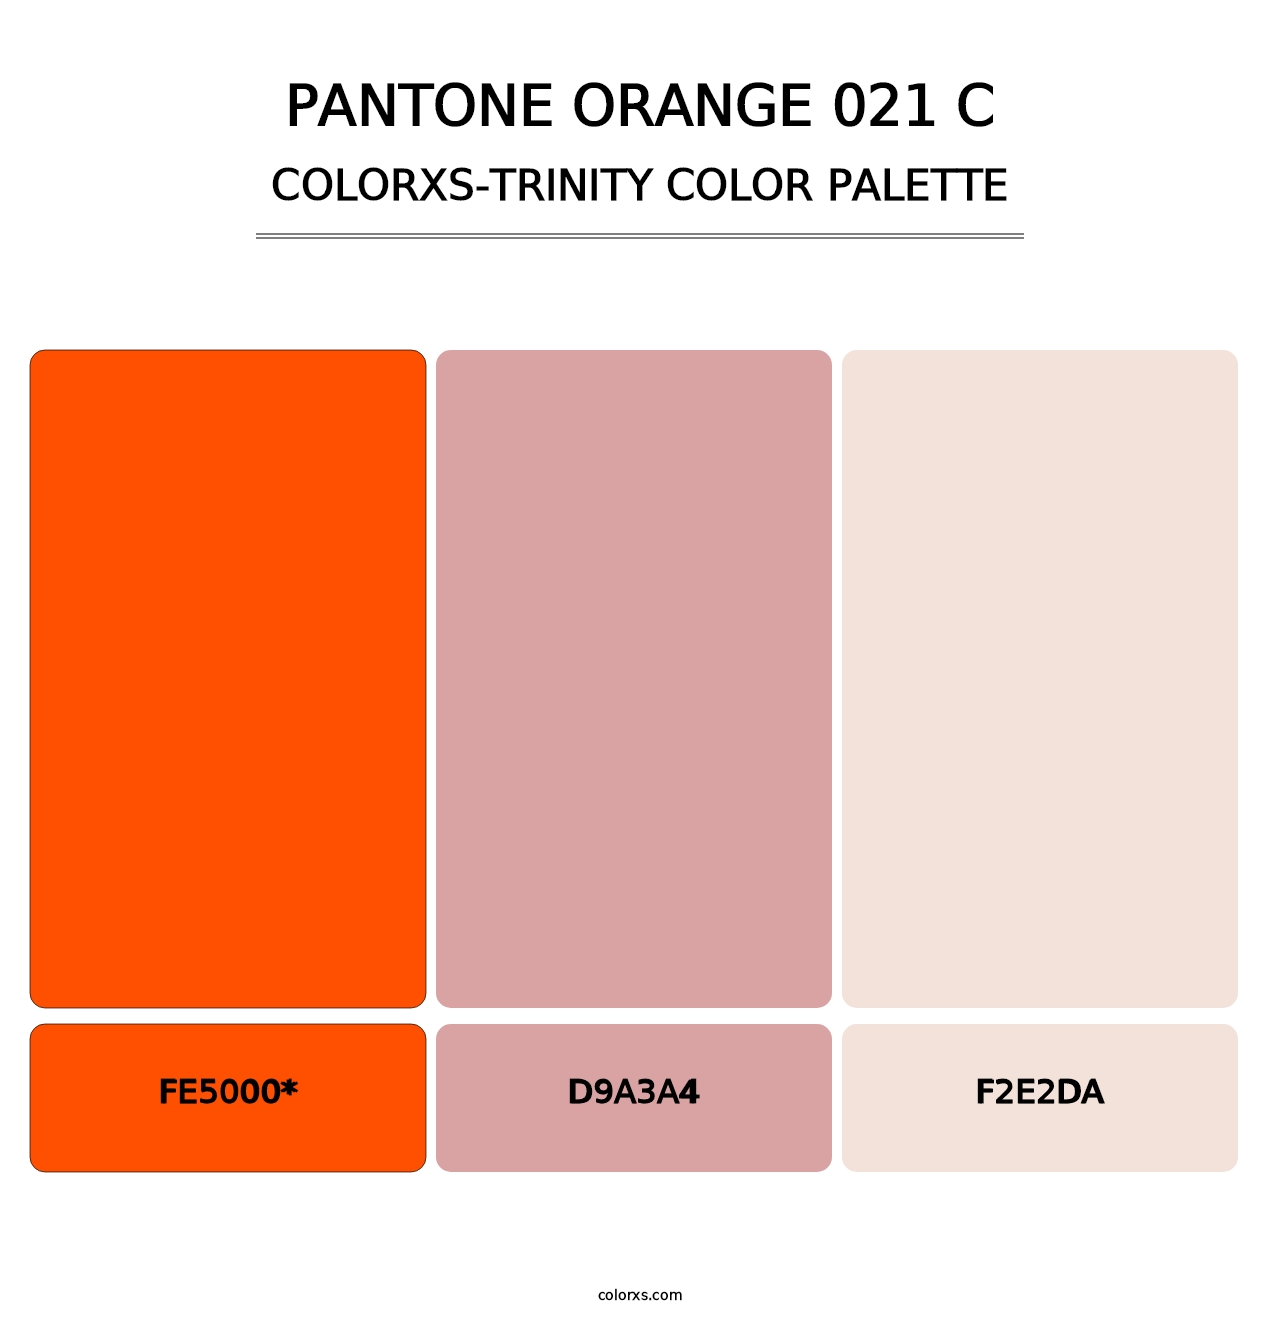 PANTONE Orange 021 C - Colorxs Trinity Palette